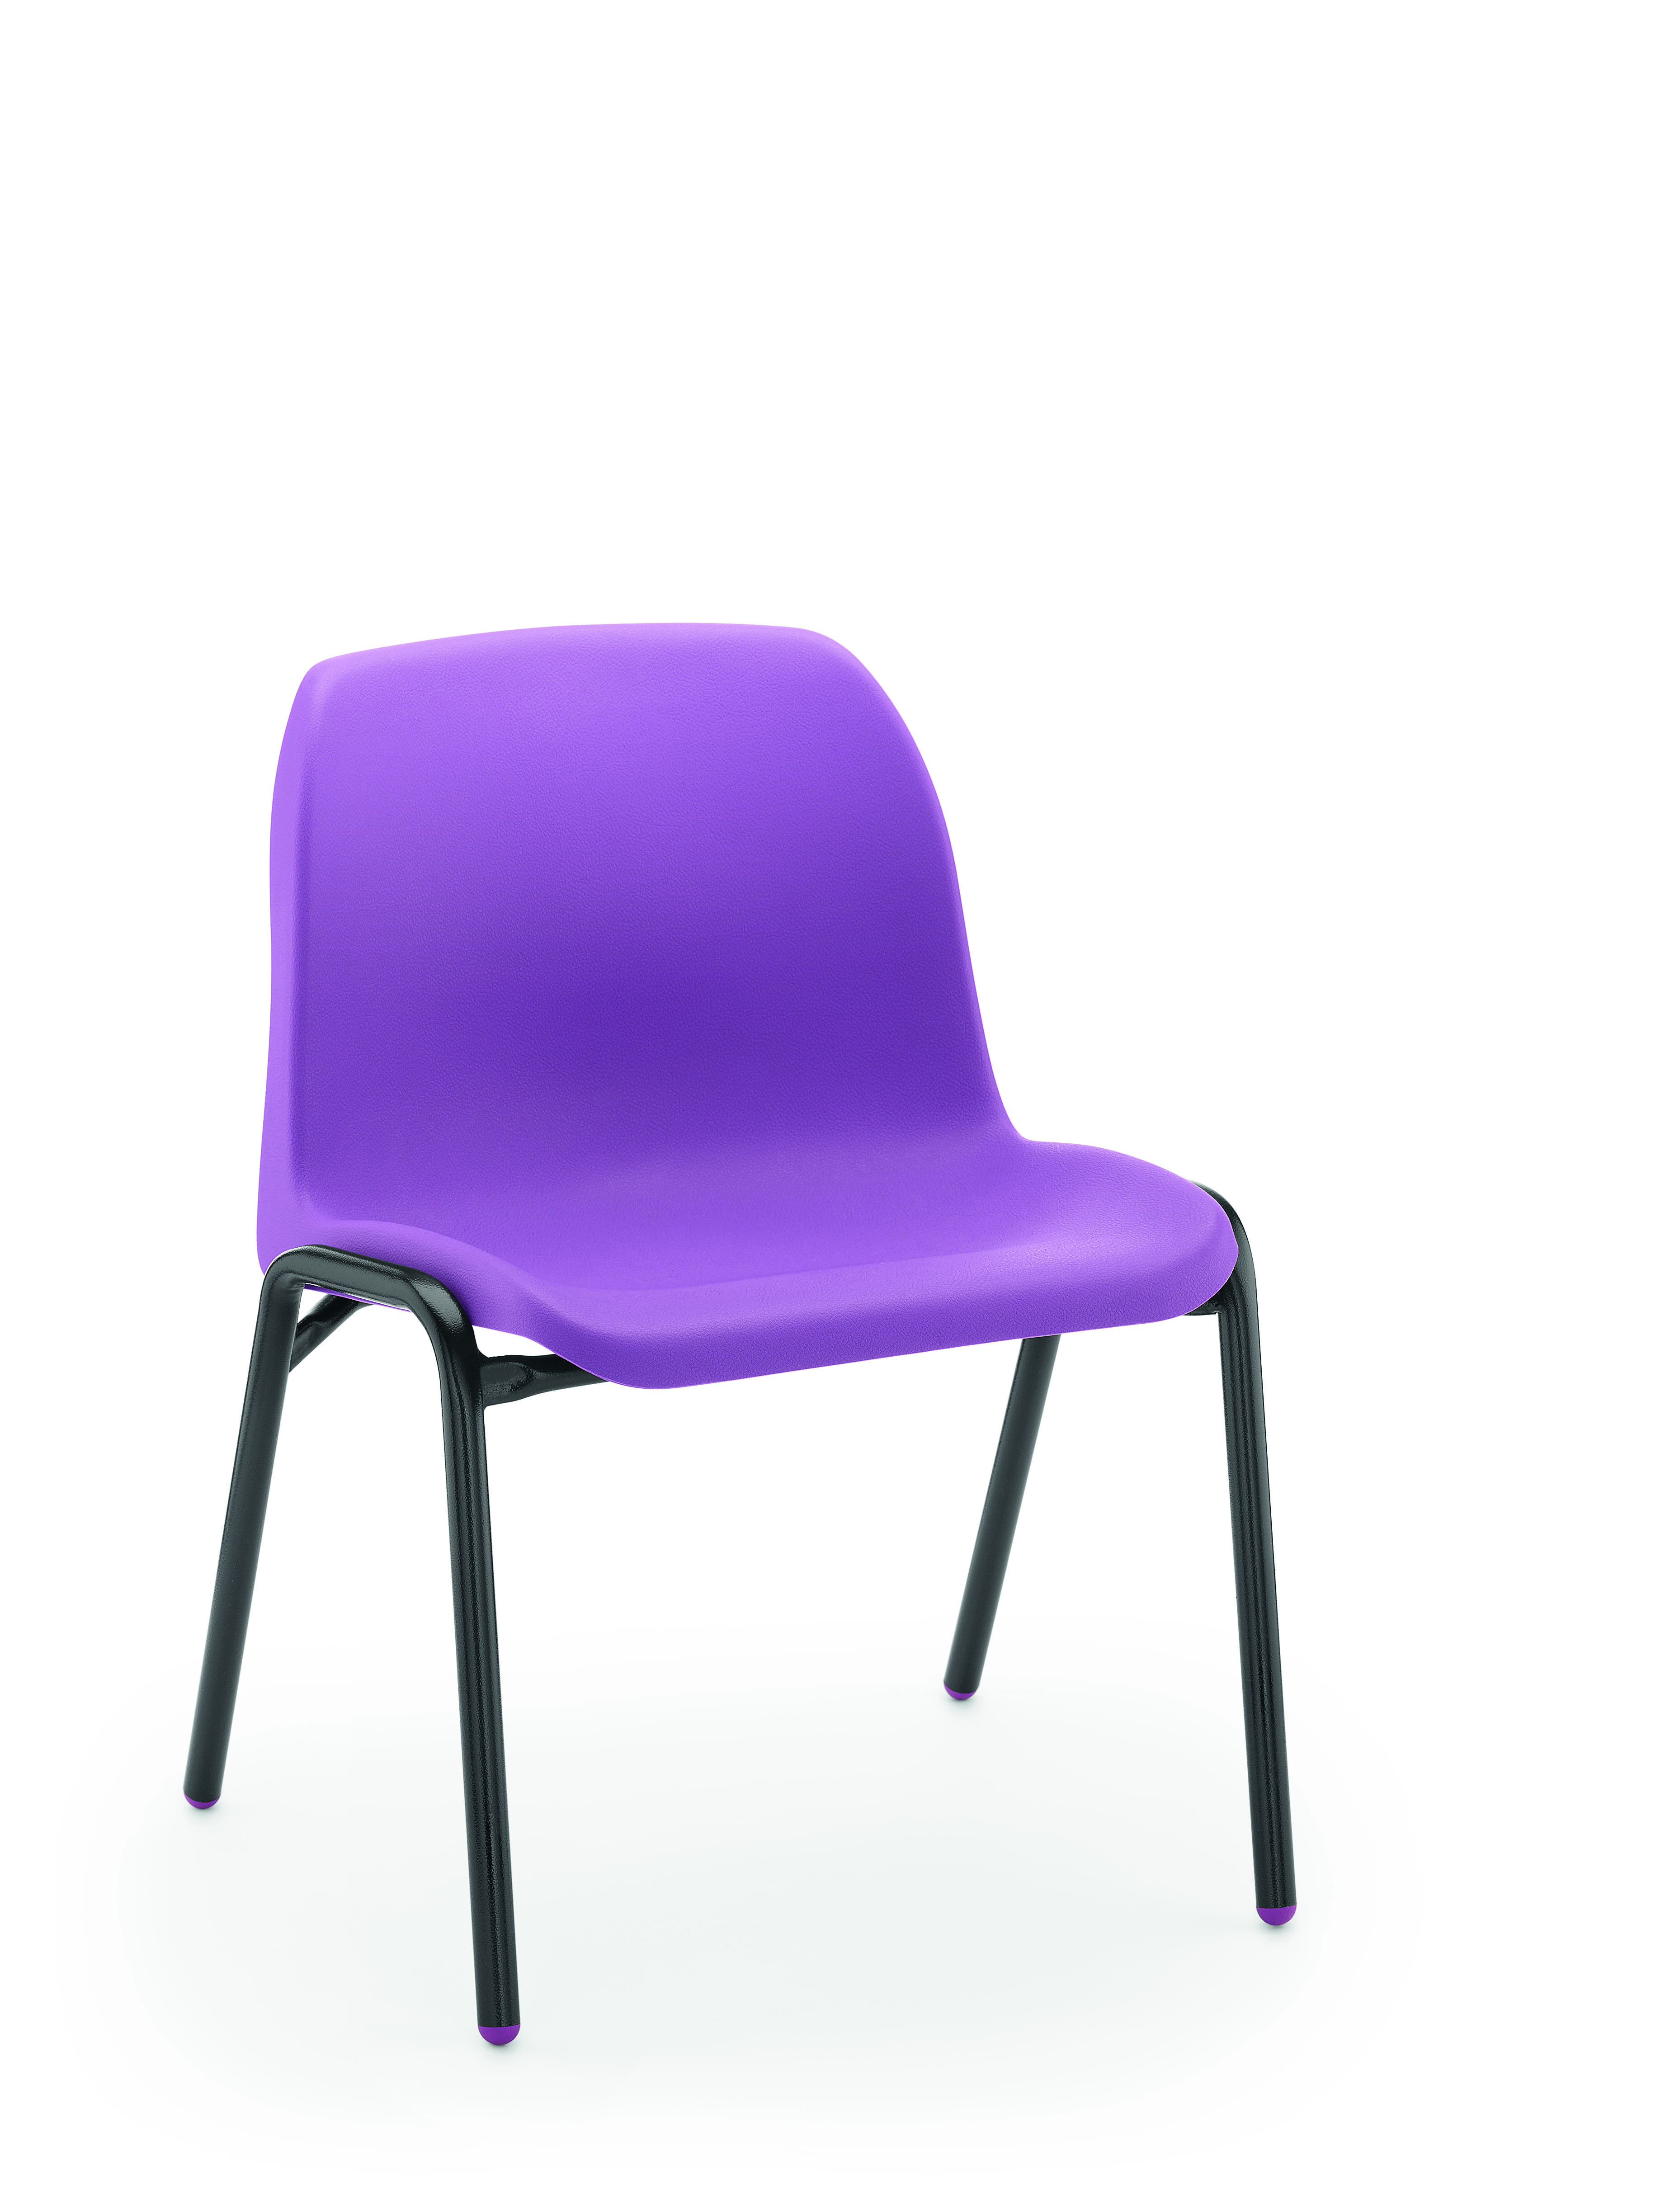 Classmates Chairs Purple - 11-14 years